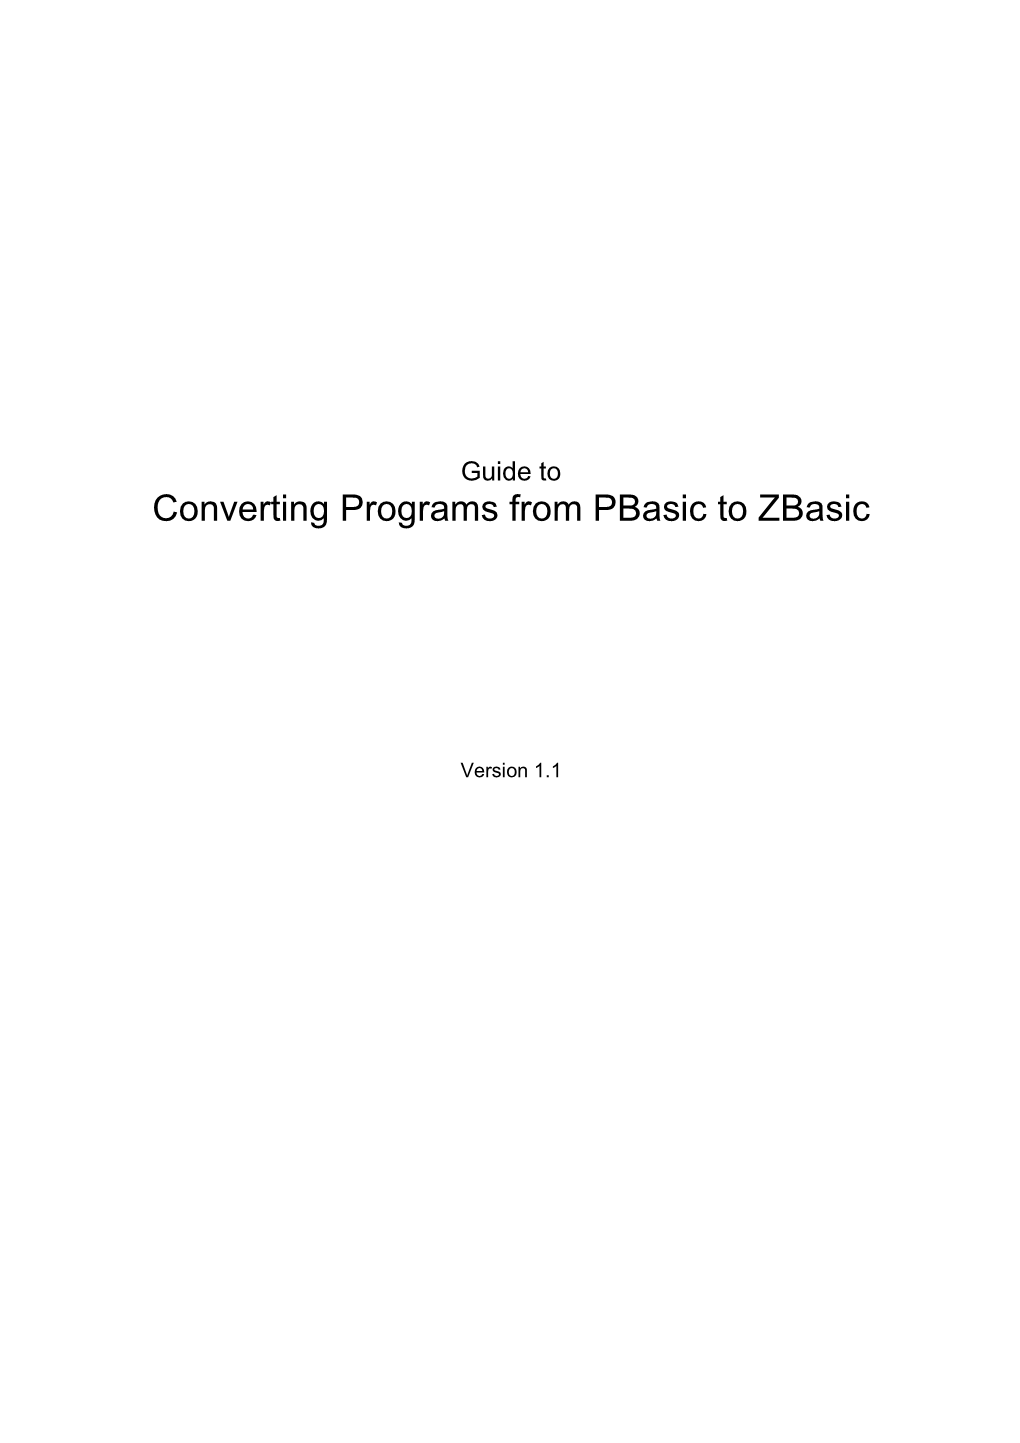 Converting Programs from Pbasic to Zbasic